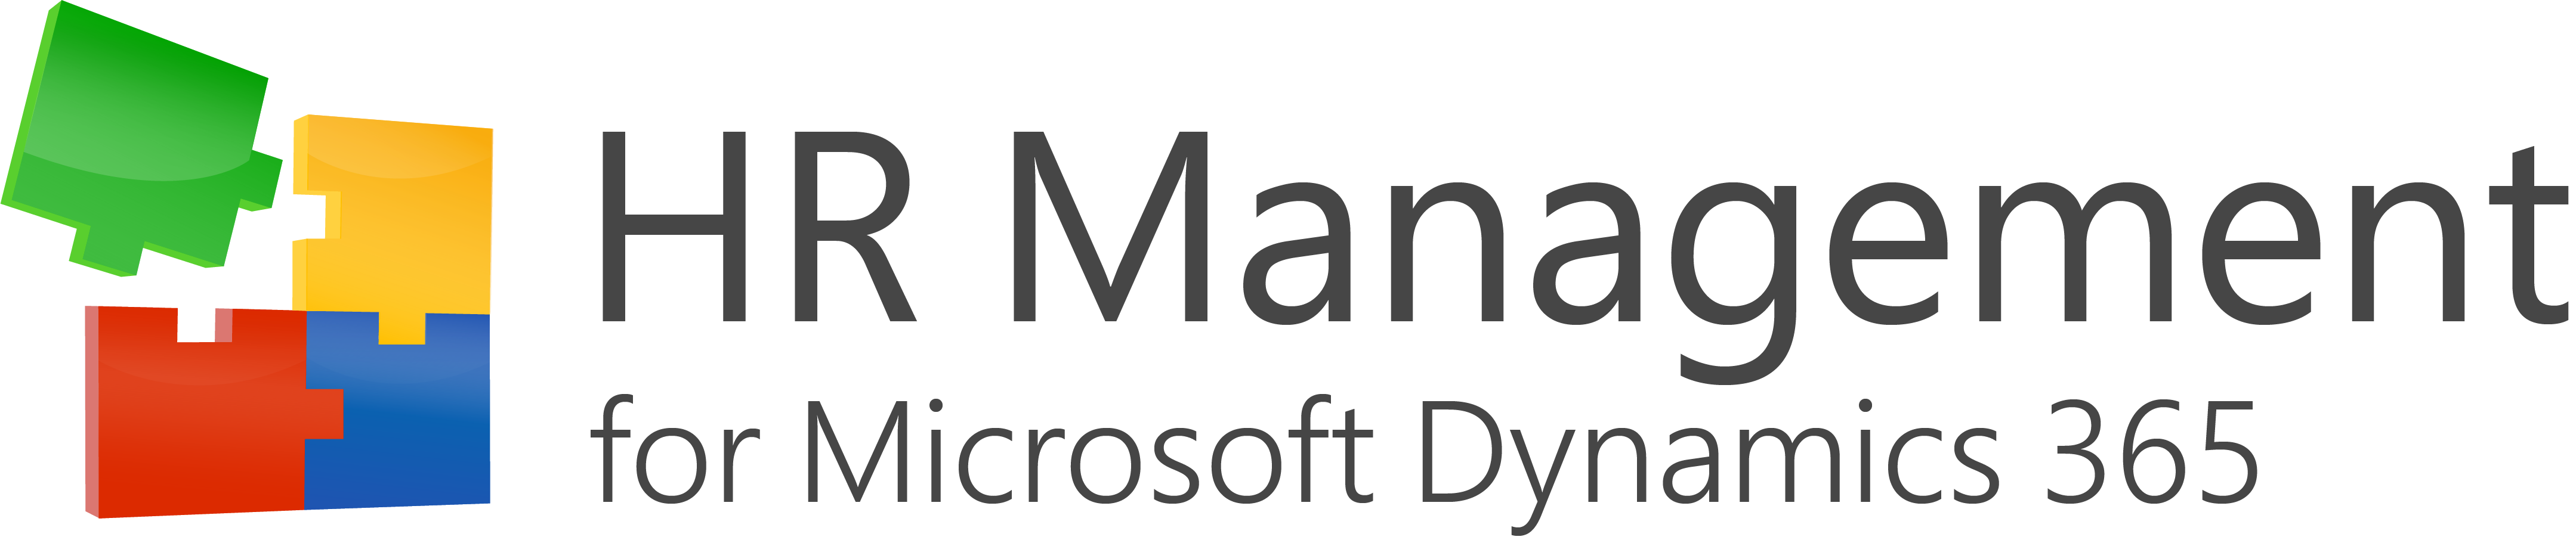 HR Management for Microsoft Dynamics 365 Logo